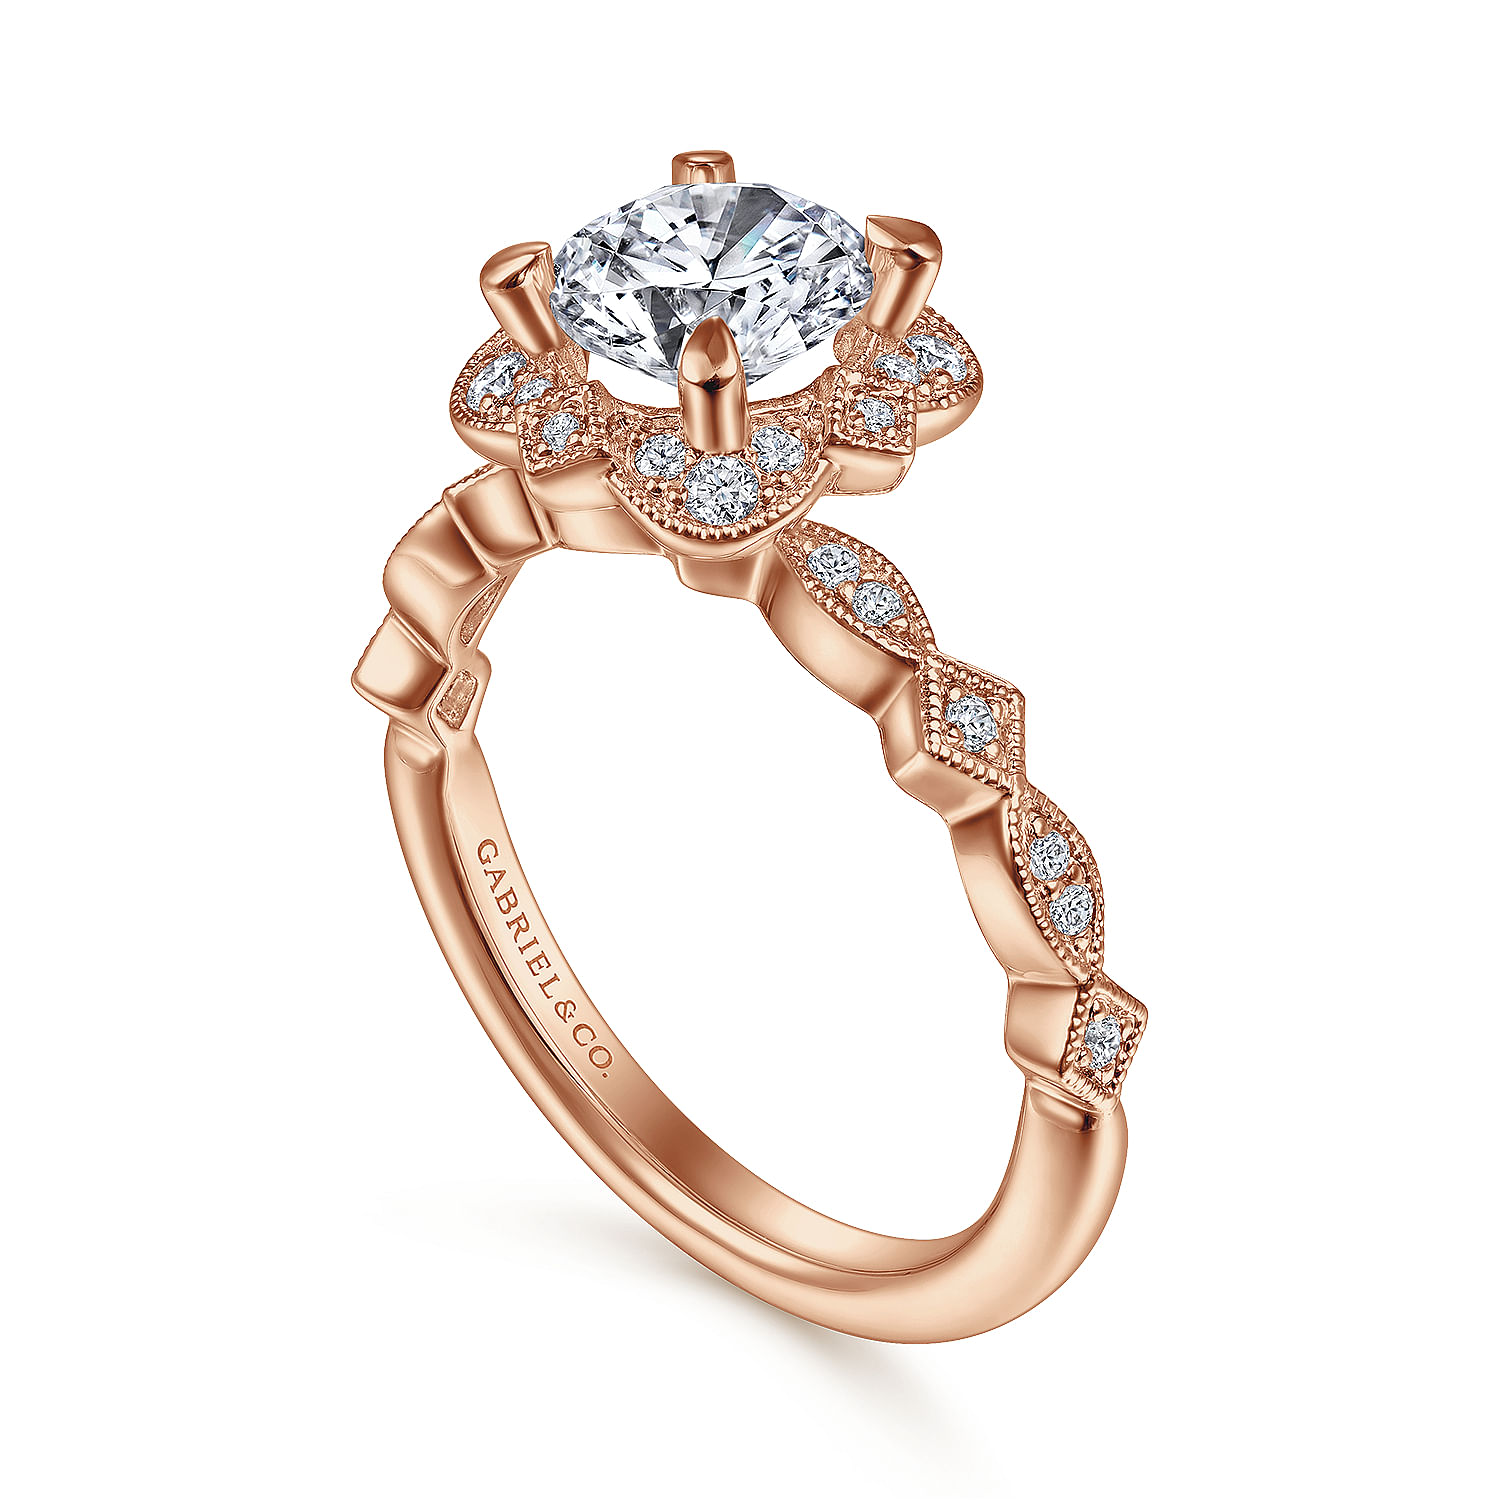 Vintage Inspired 14K Rose Gold Fancy Halo Round Diamond Engagement Ring